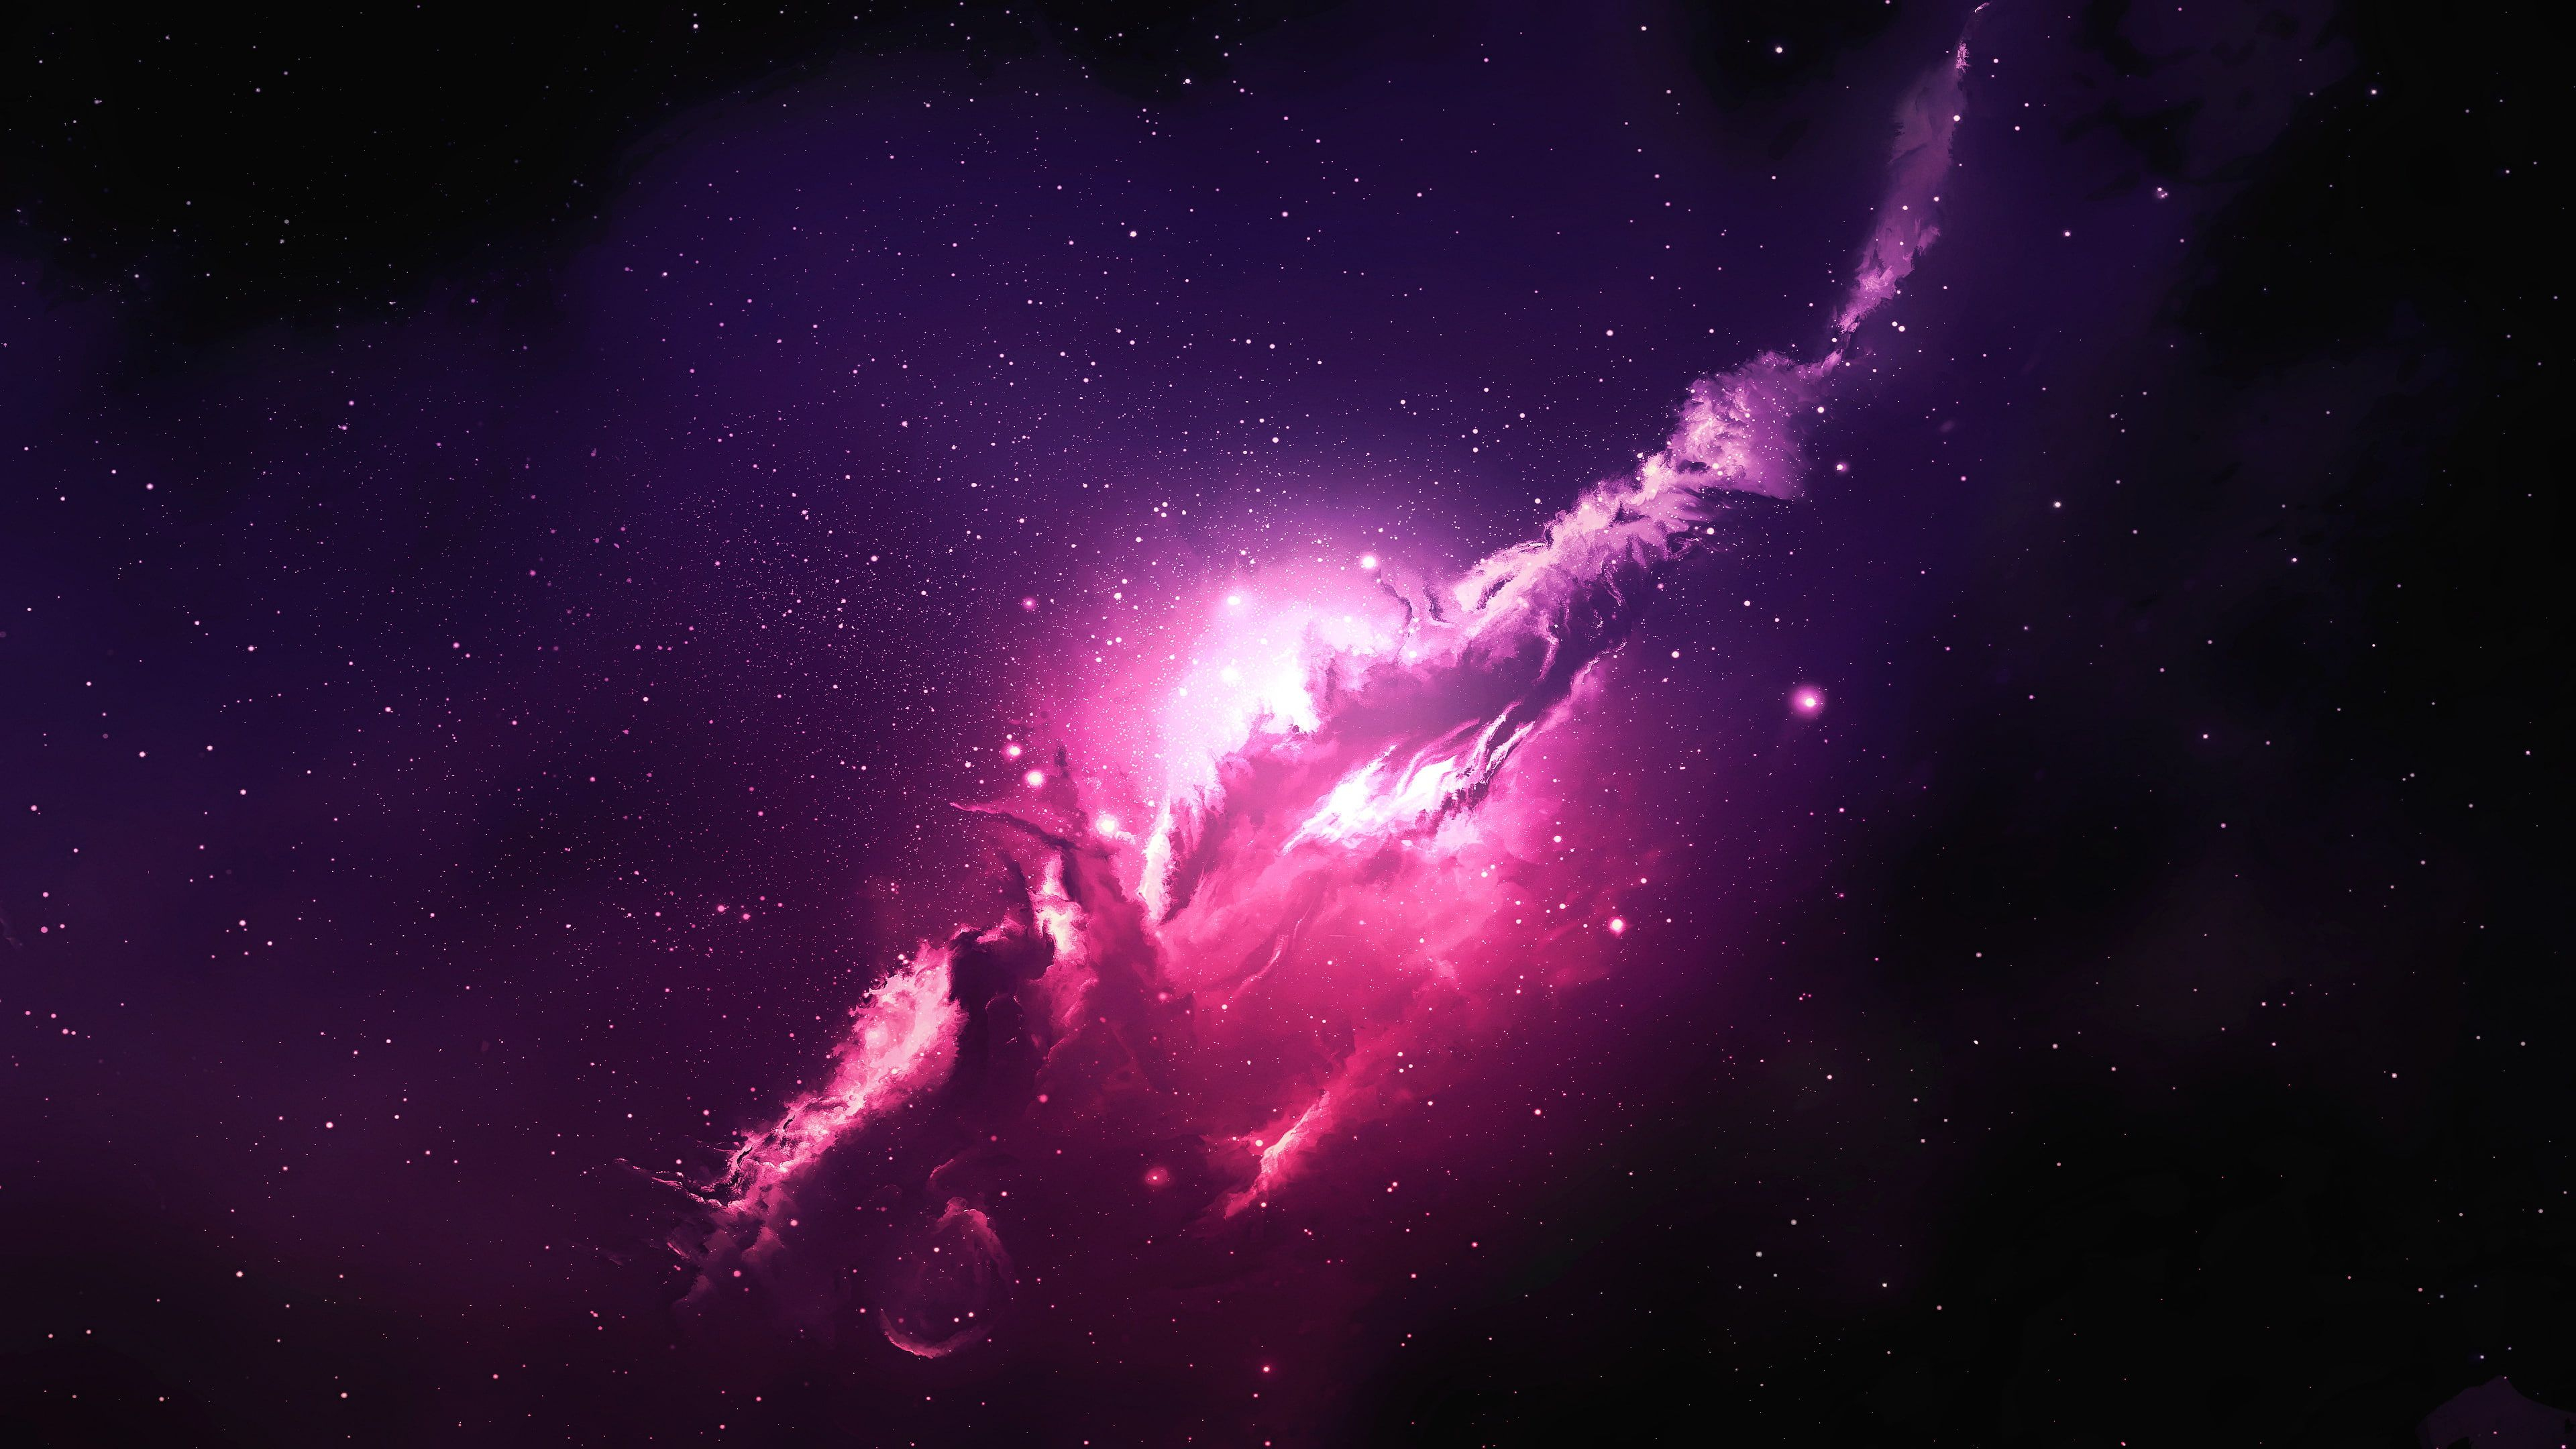 3840x2160 nebula #stars #universe #galaxy #space #4k digital universe #hd #4K # wallpaper #hdwallpaper #desktop | Nebula wallpaper, Wallpaper space, Galaxy wallpaper